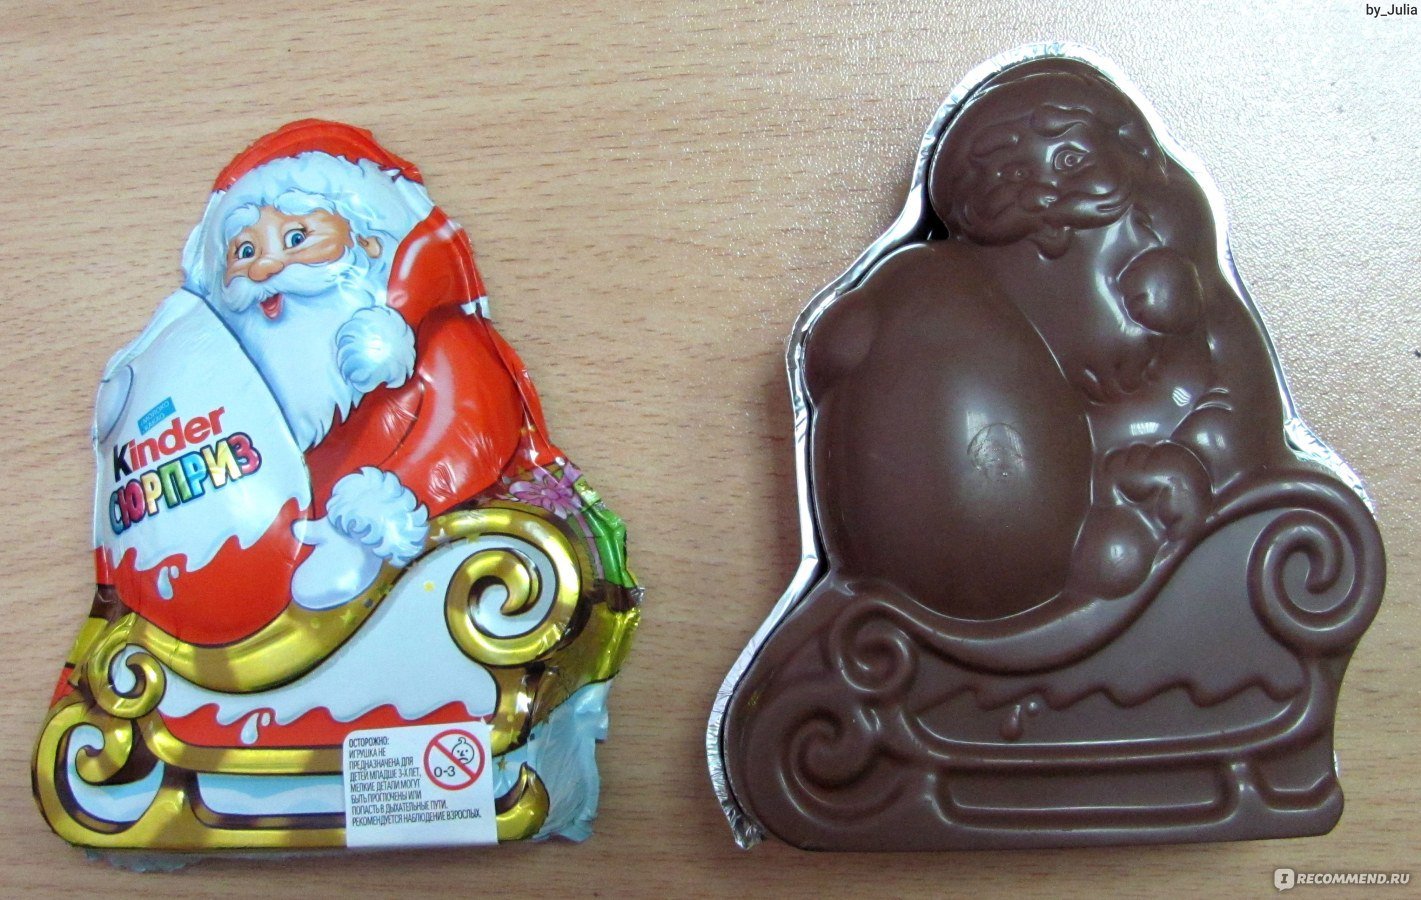 Киндер мороз. Шоколад kinder дед Мороз. Шоколадная фигурка дед Мороз. Шоколадный дед Мороз Киндер. Киндер фигурки шоколадные.